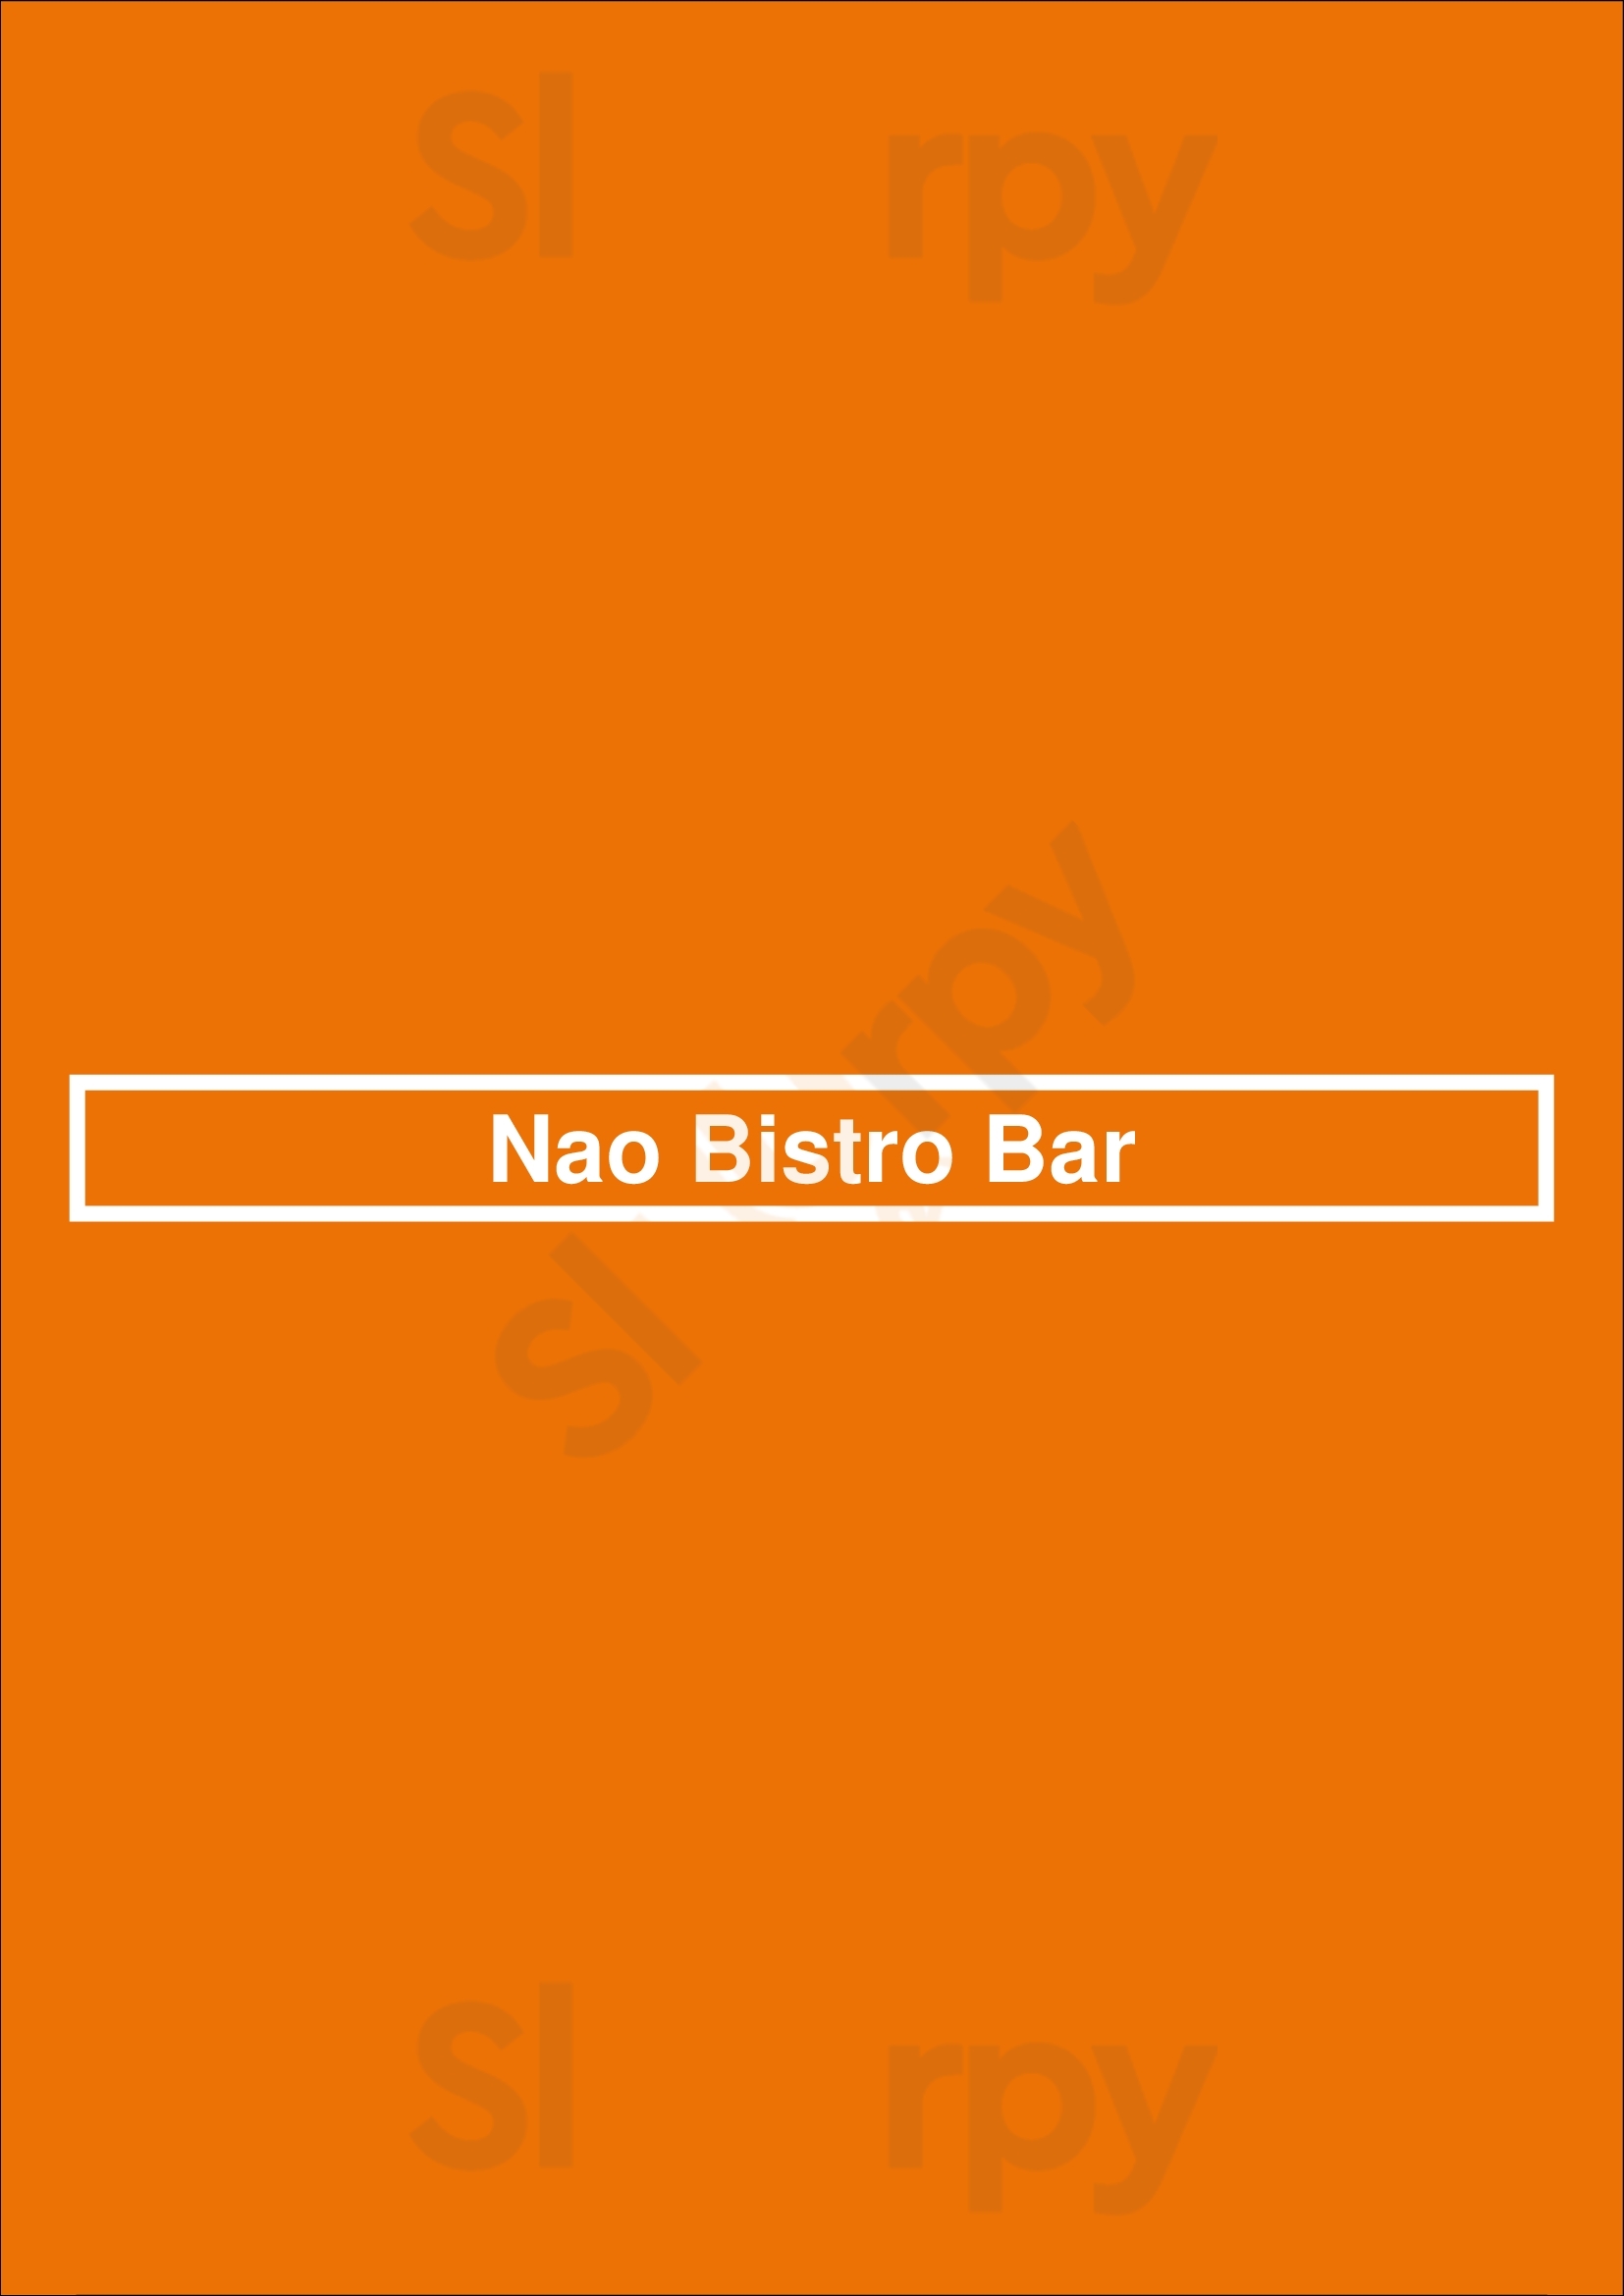 Nao Bistro Bar Vaciamadrid Menu - 1